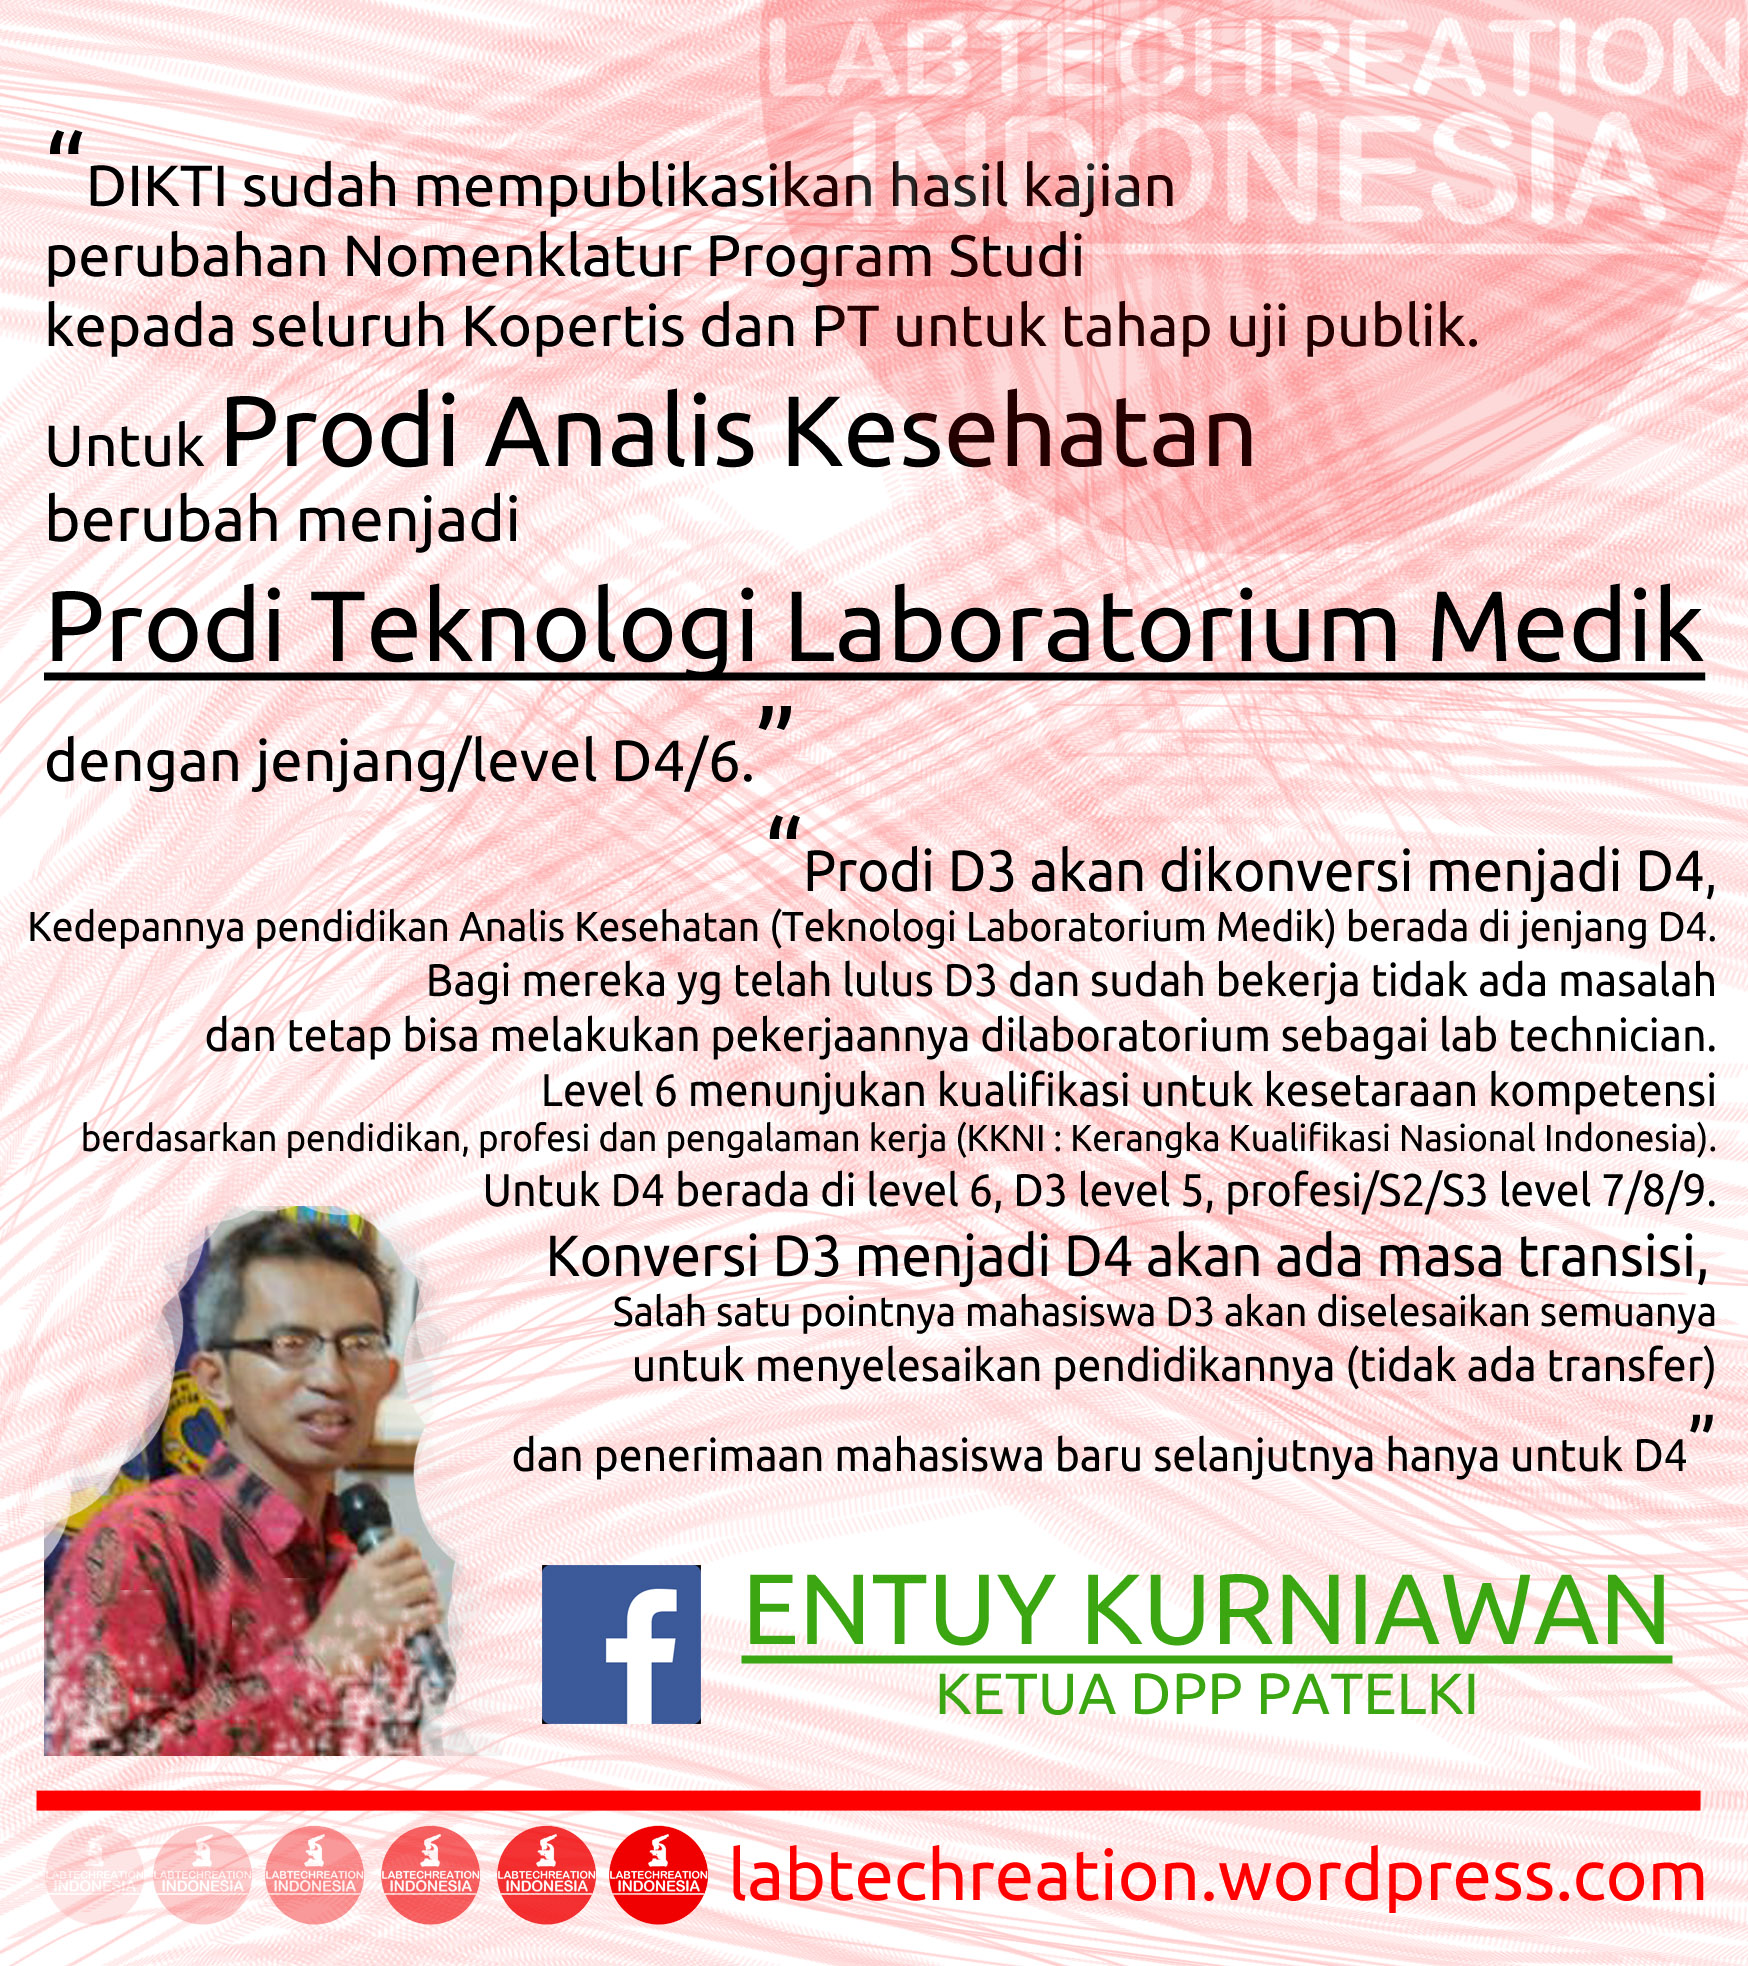 Berita Labtechreation Indonesia